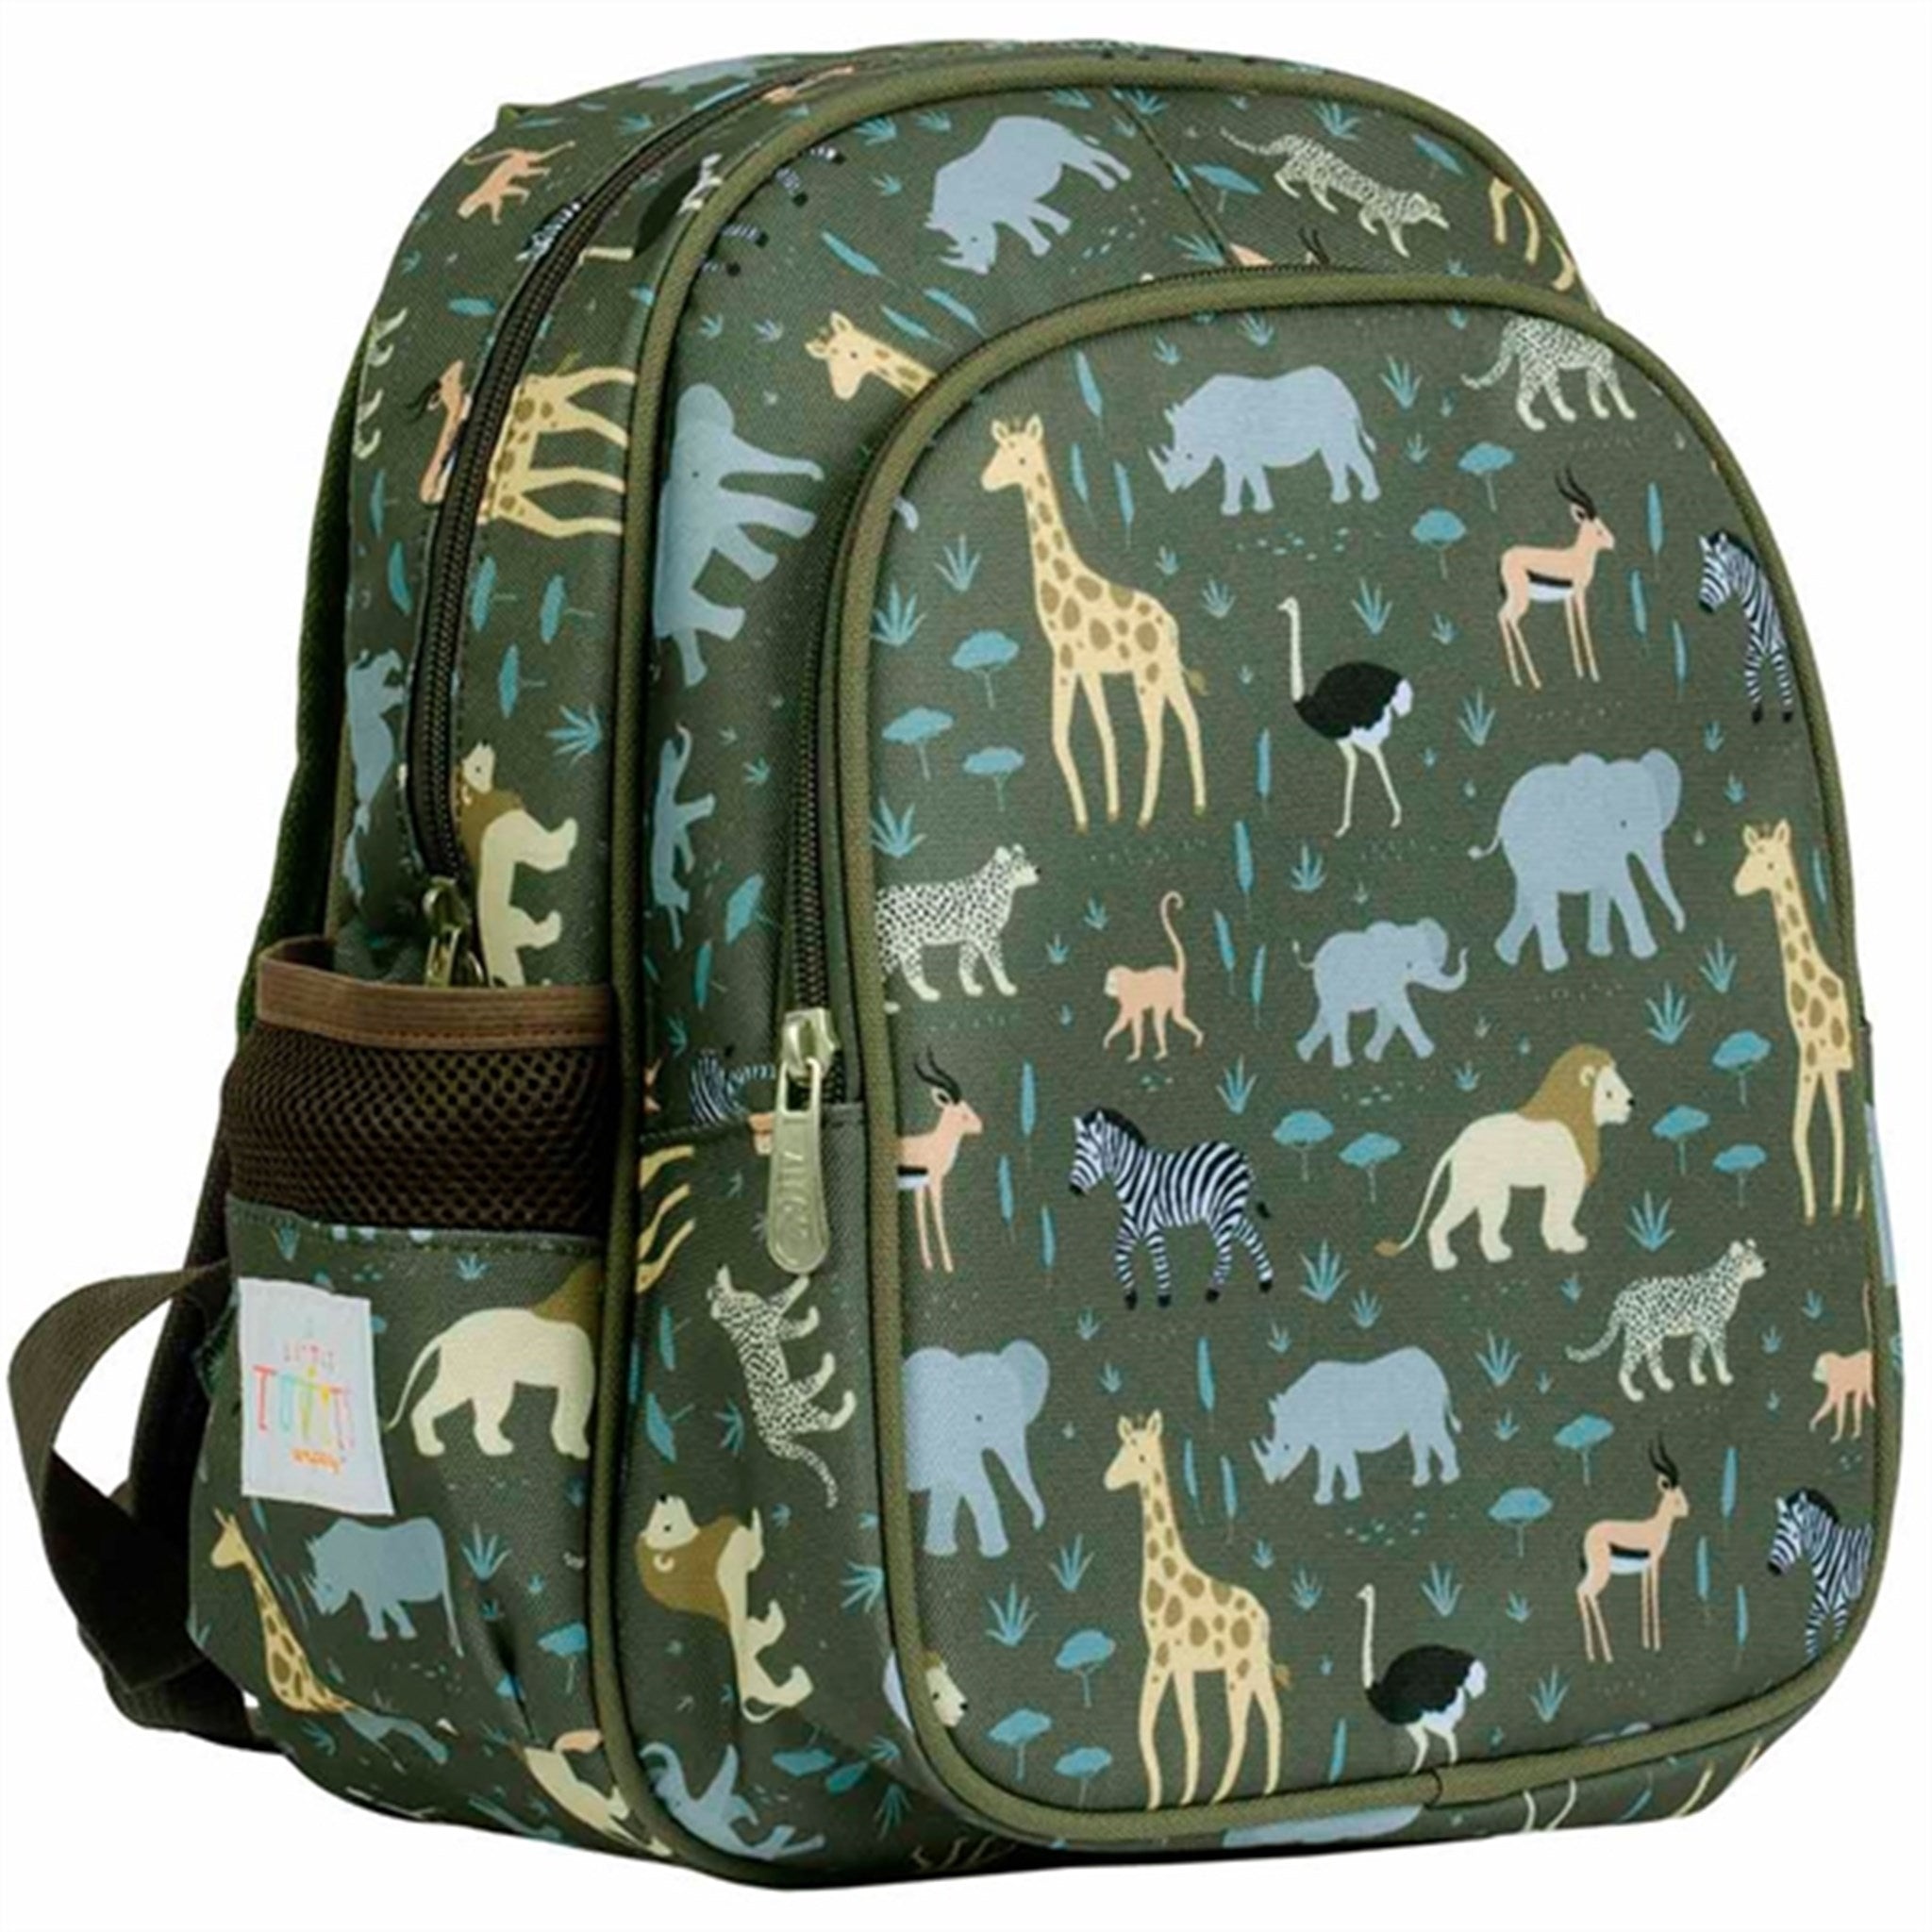 A Little Lovely Company Backpack Savanna 2